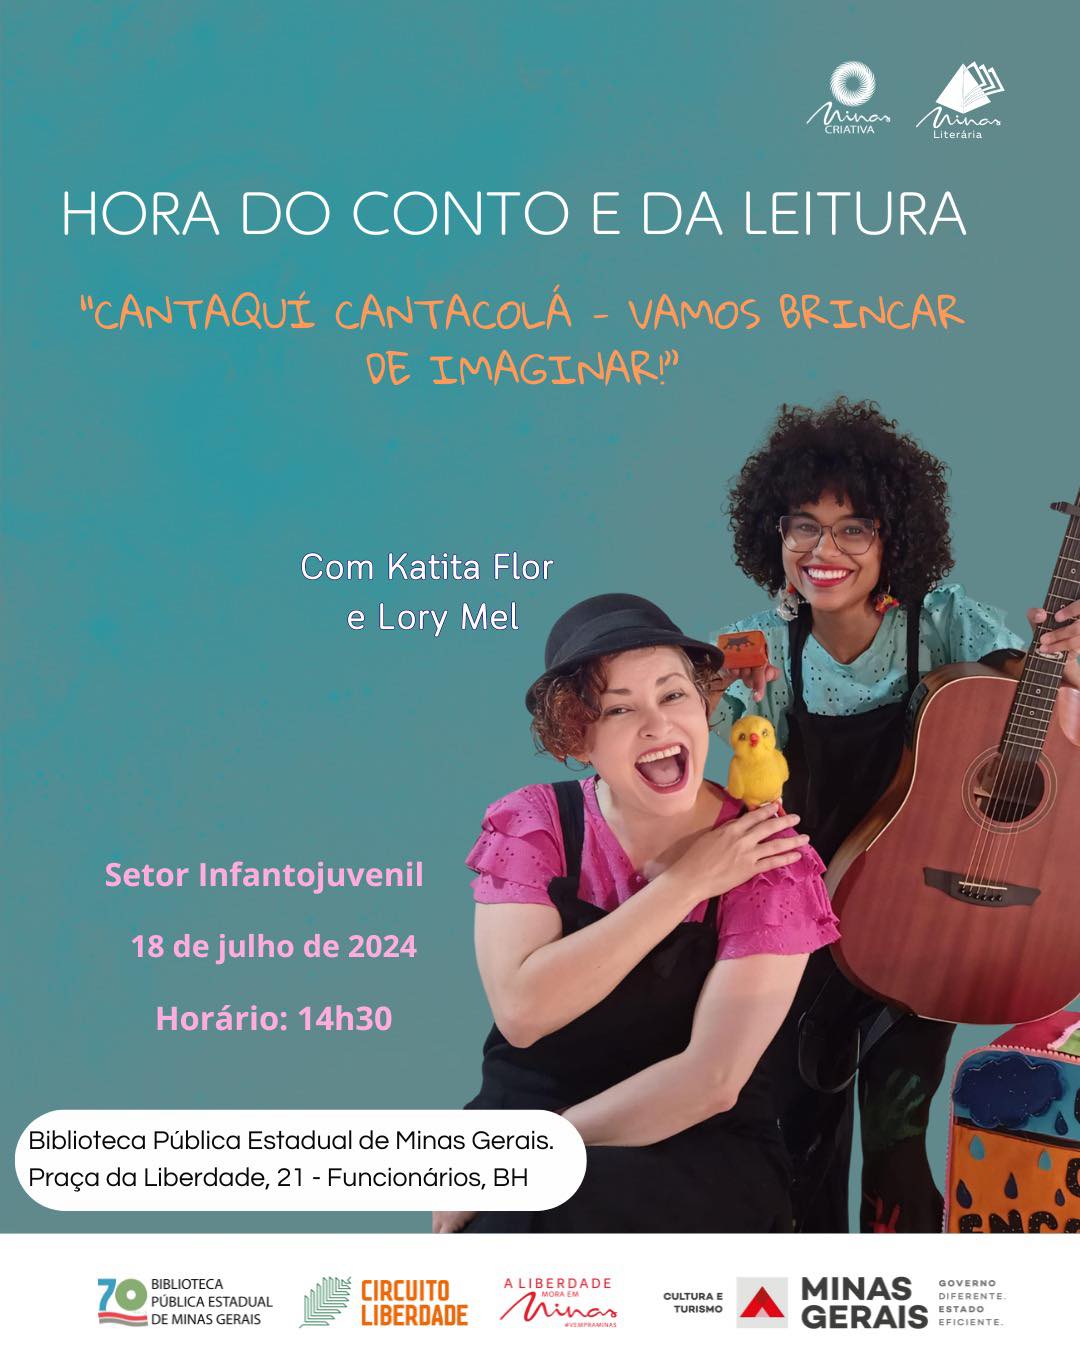 Hora do Conto e da Leitura: "Cantaquí Cantacolá - Vamos Brincar de Imaginar!" com Katita Flor e Lory Mel